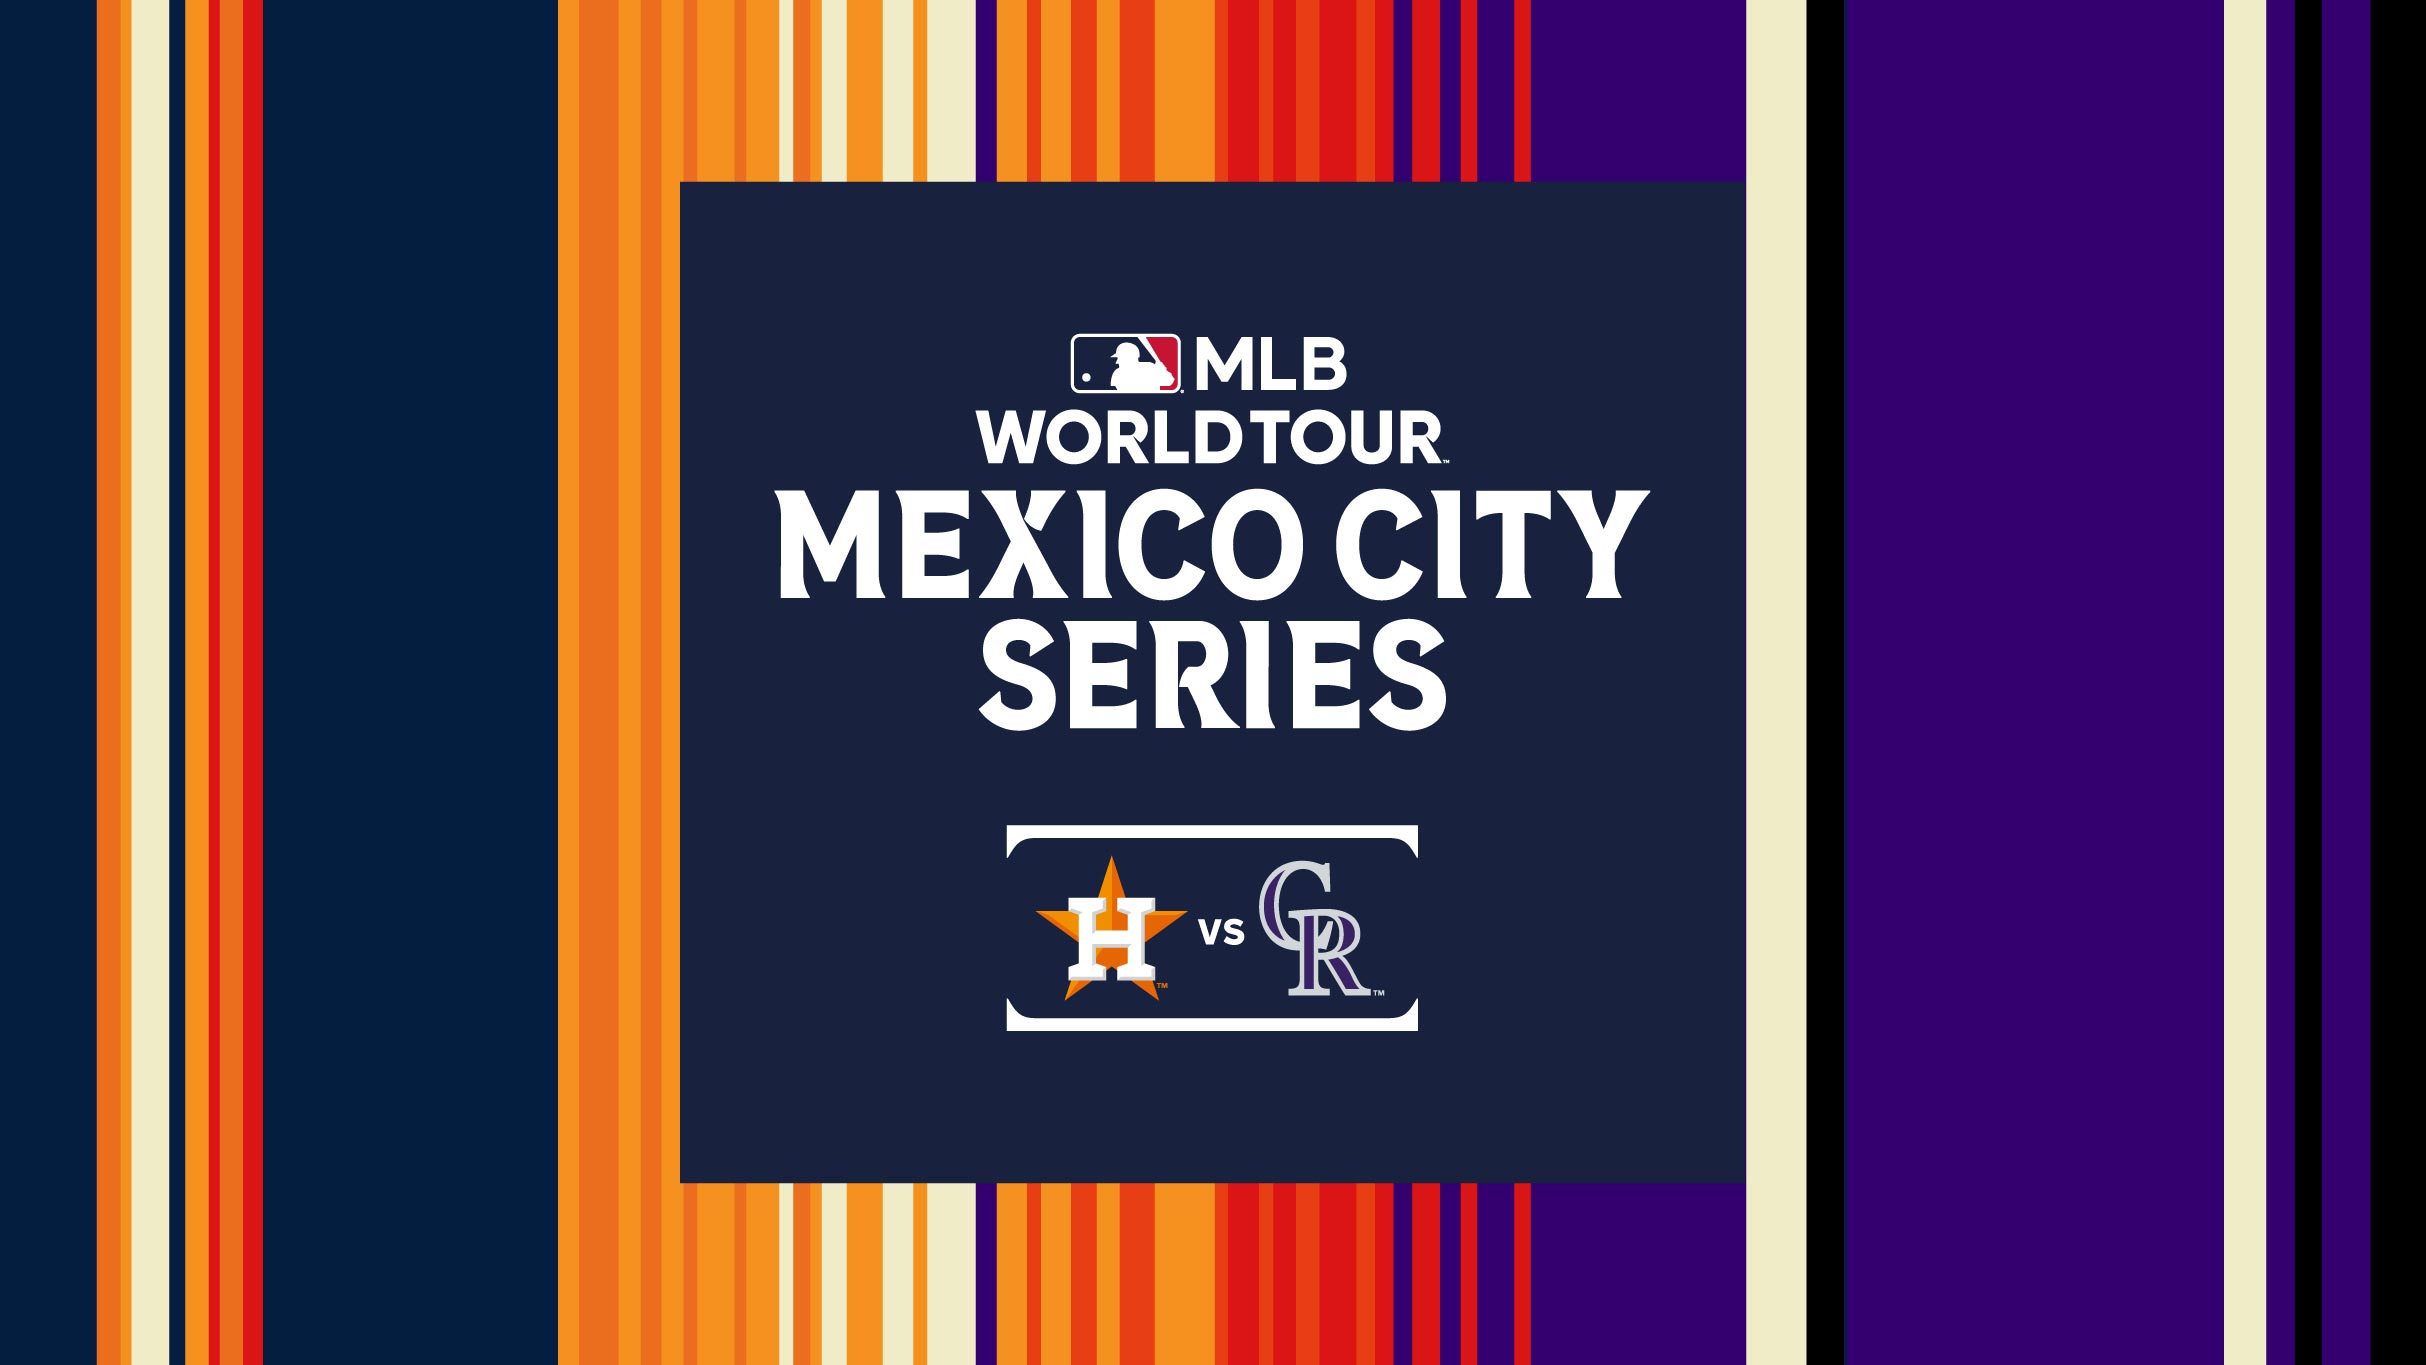 MLB Mexico City Series presale information on freepresalepasswords.com